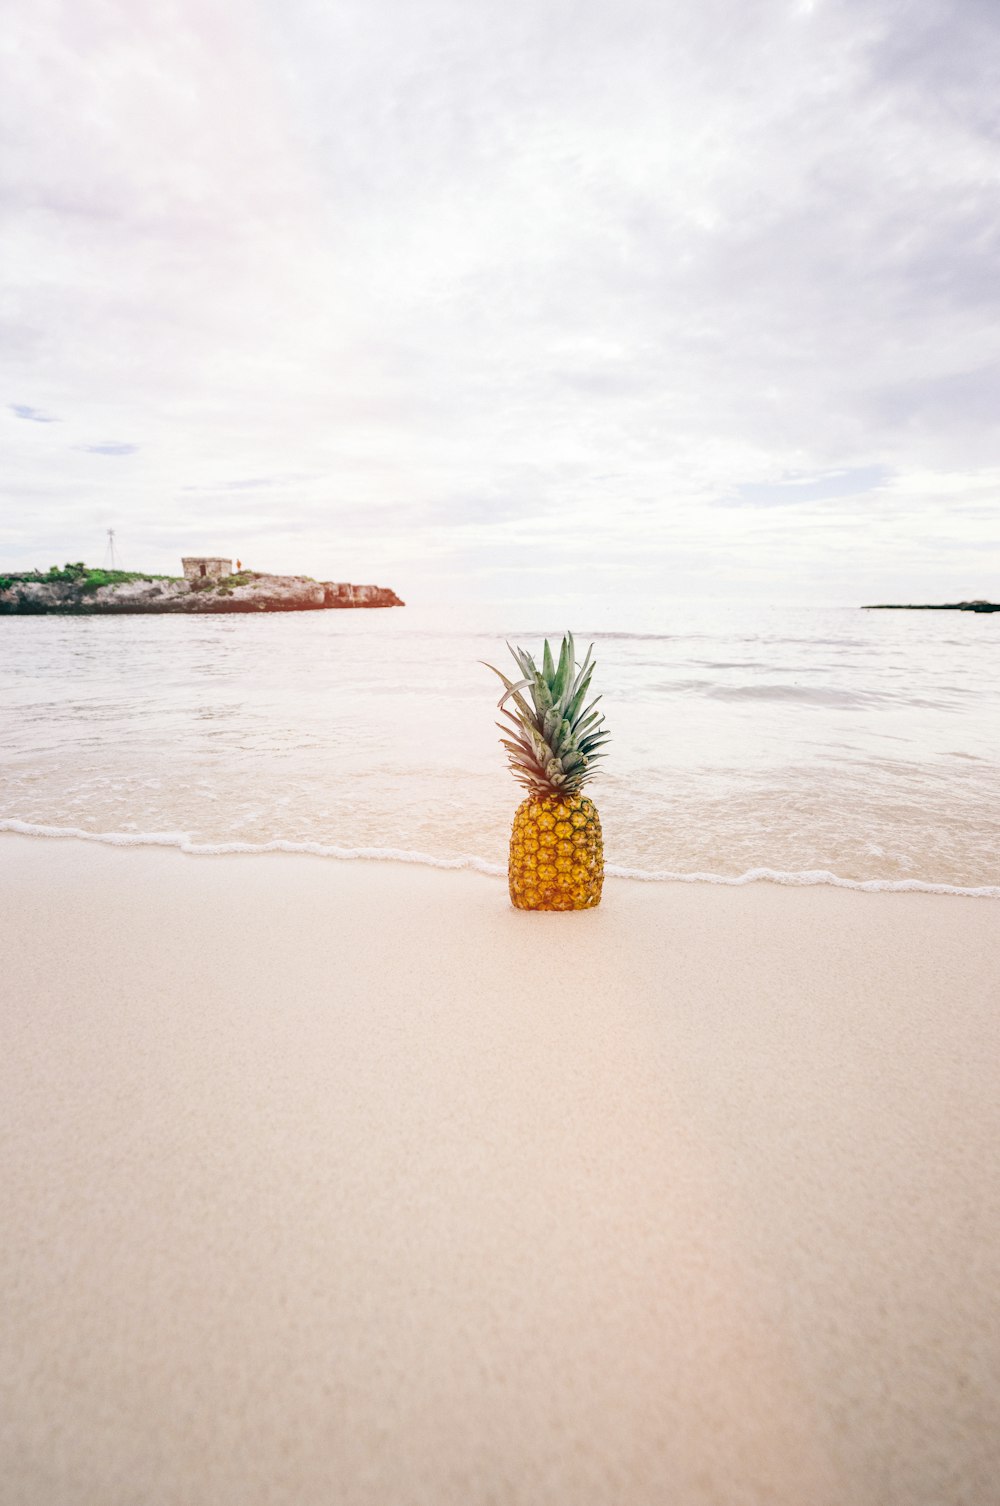 Ananas auf Sand in Strandnähe